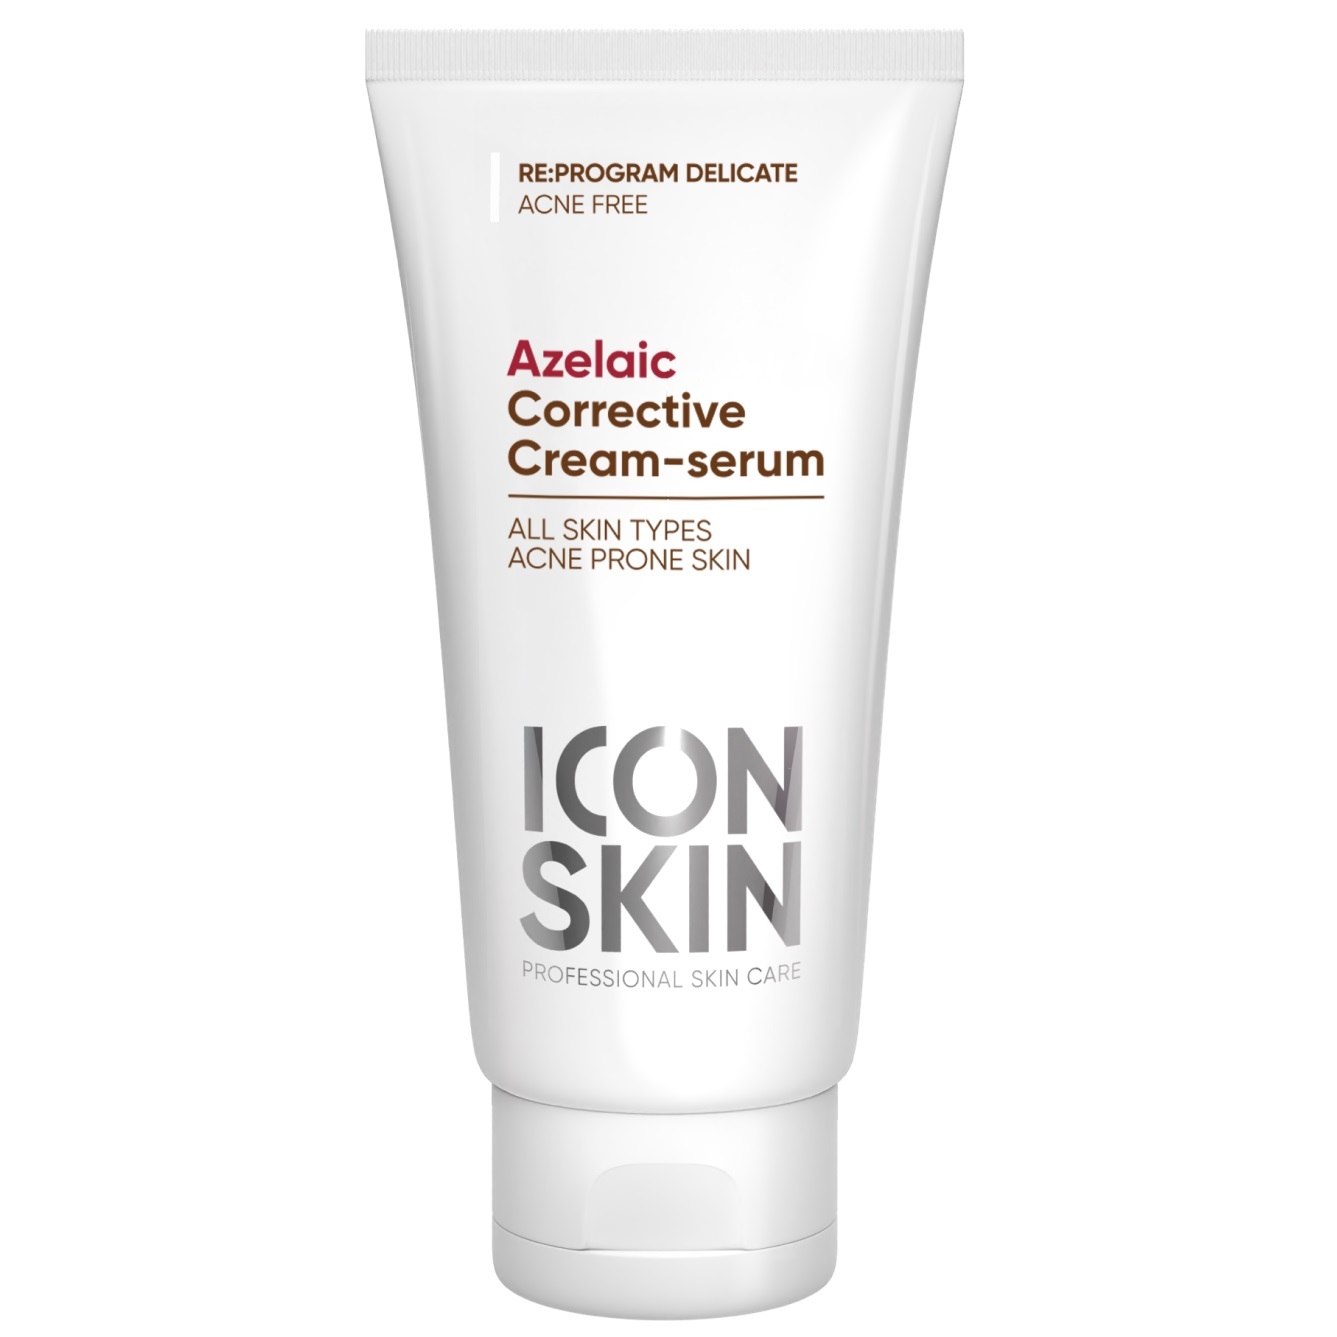 Icon Skin Корректирующая крем-сыворотка на основе 10% азелаиновой кислоты, 50 мл (Icon Skin, Re:Program Delicate) крем сыворотка корректирующая на основе 10% азелаиновой кислоты icon skin azelaiс corrective cream serum 30 мл